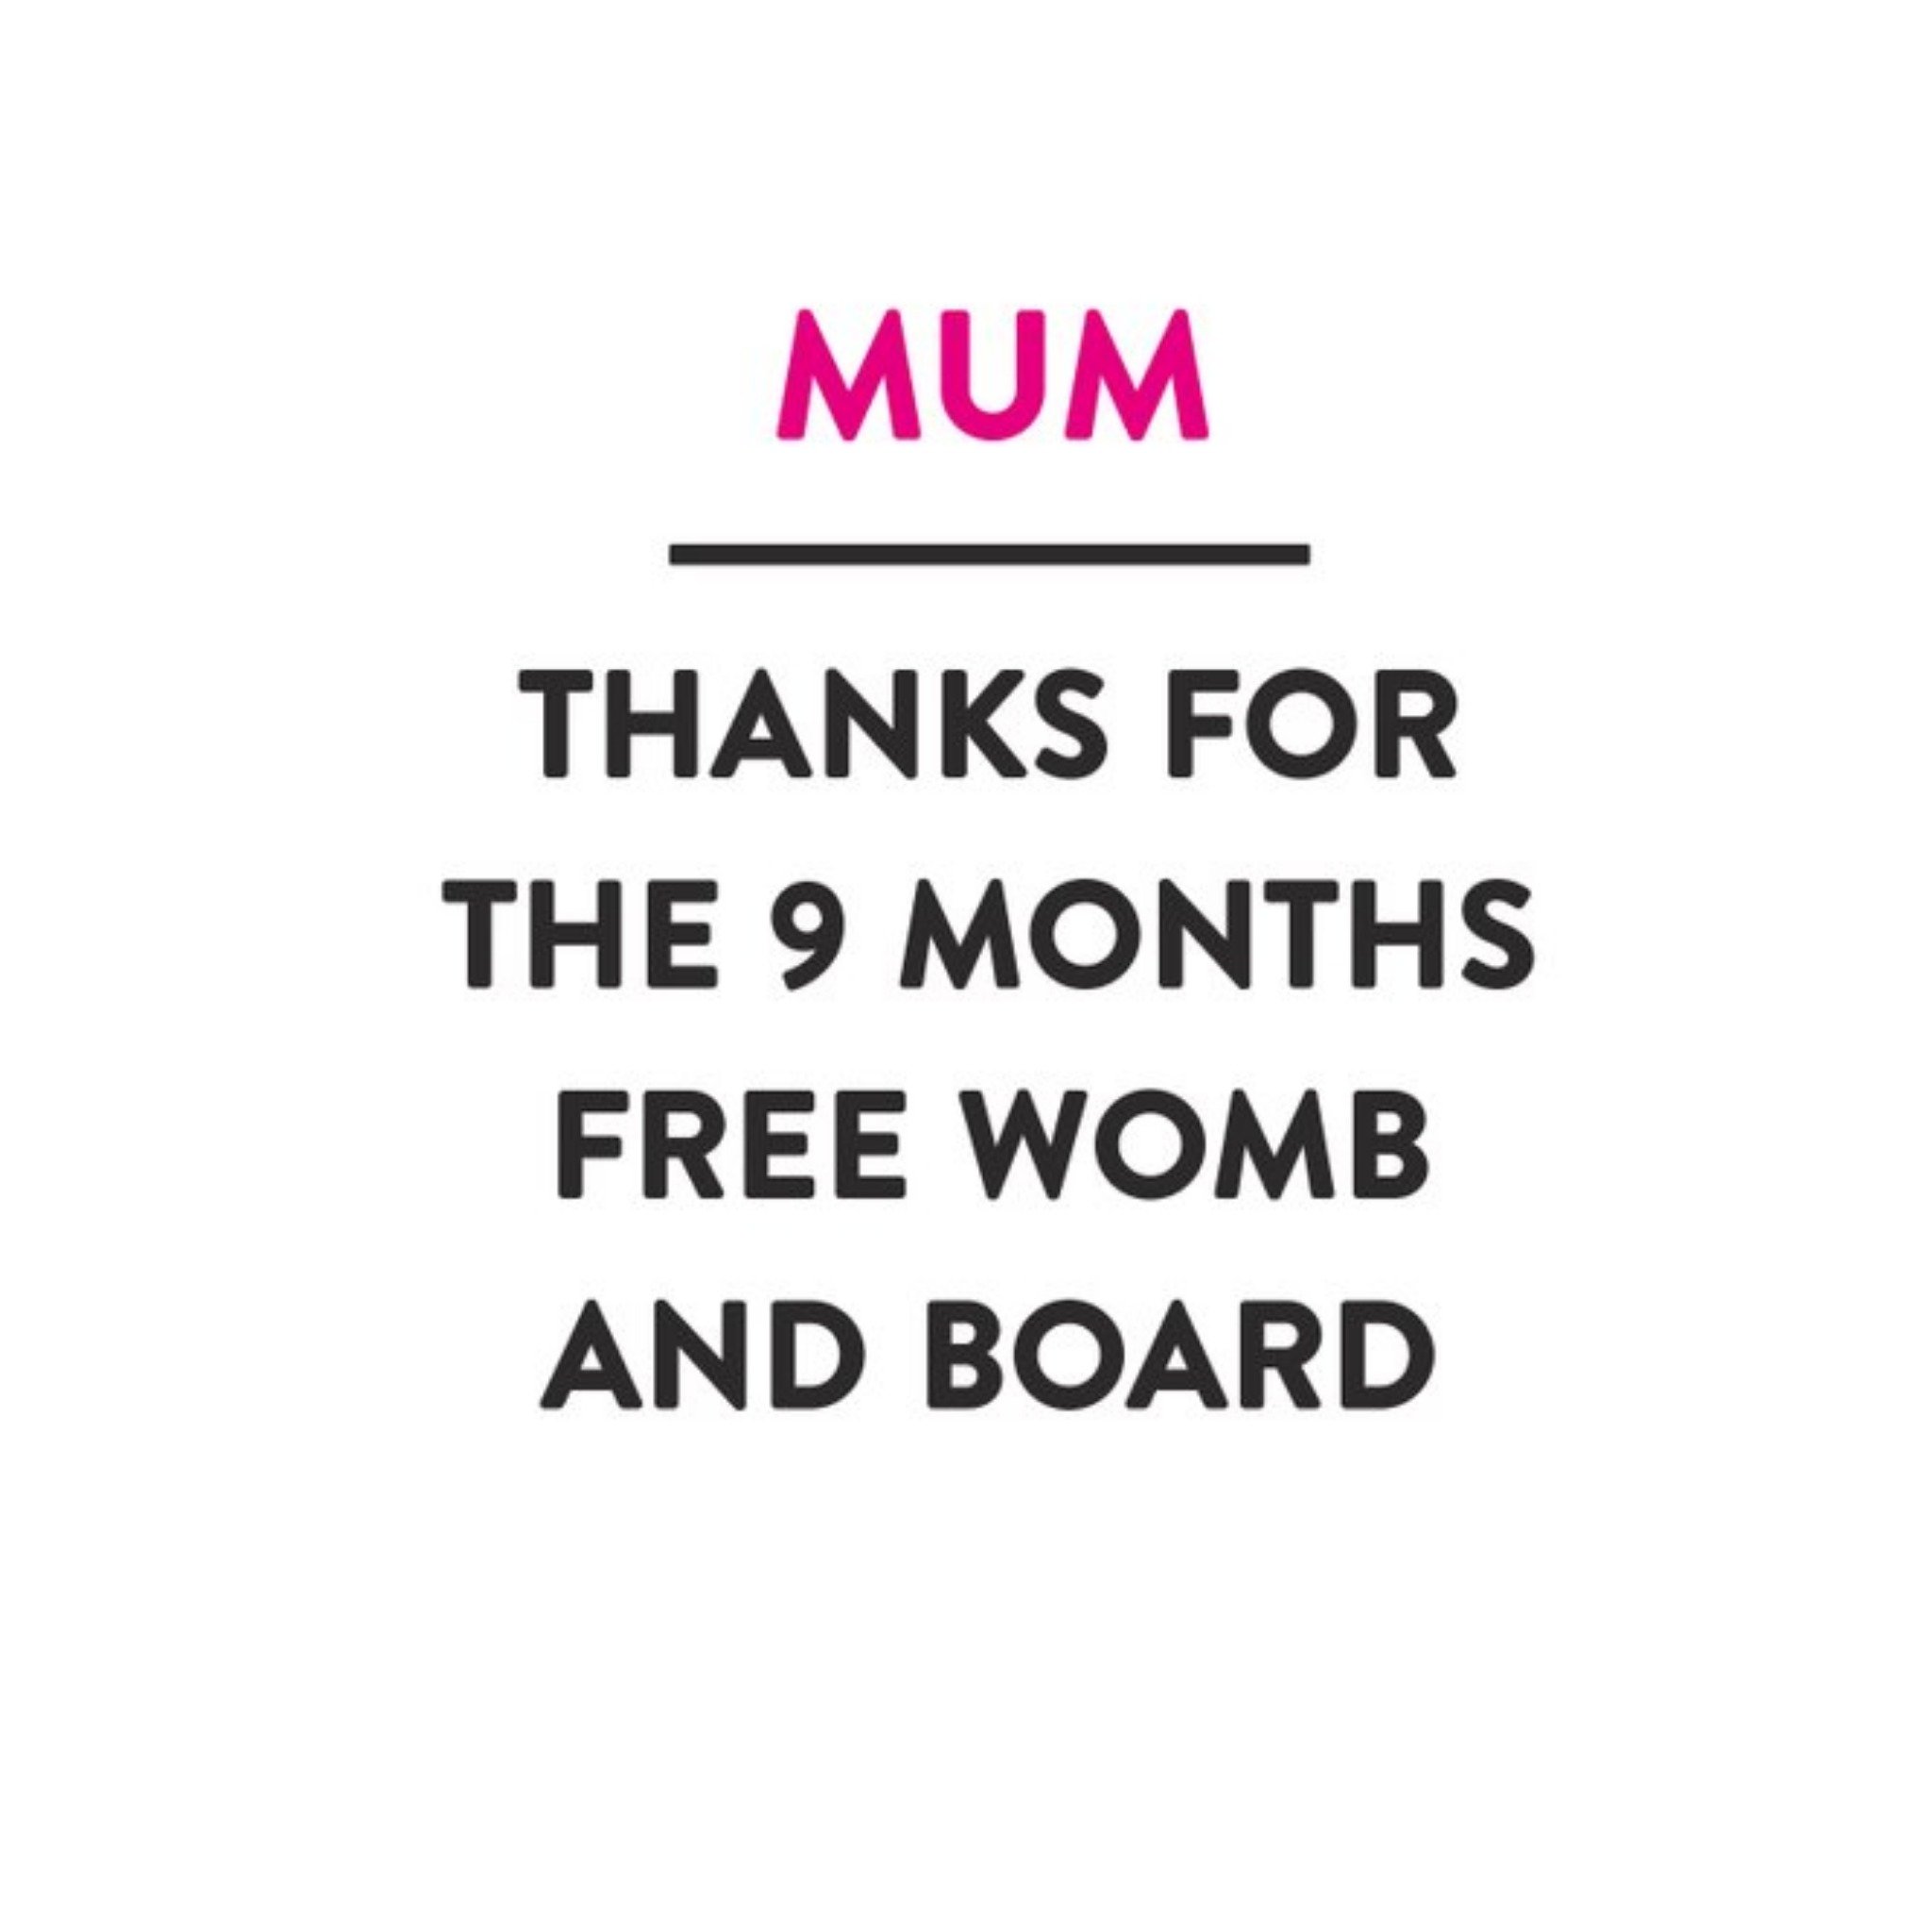 Moonpig Ukg Hanson White Pun Typographic Lettering Mother's Day Mum Card, Square